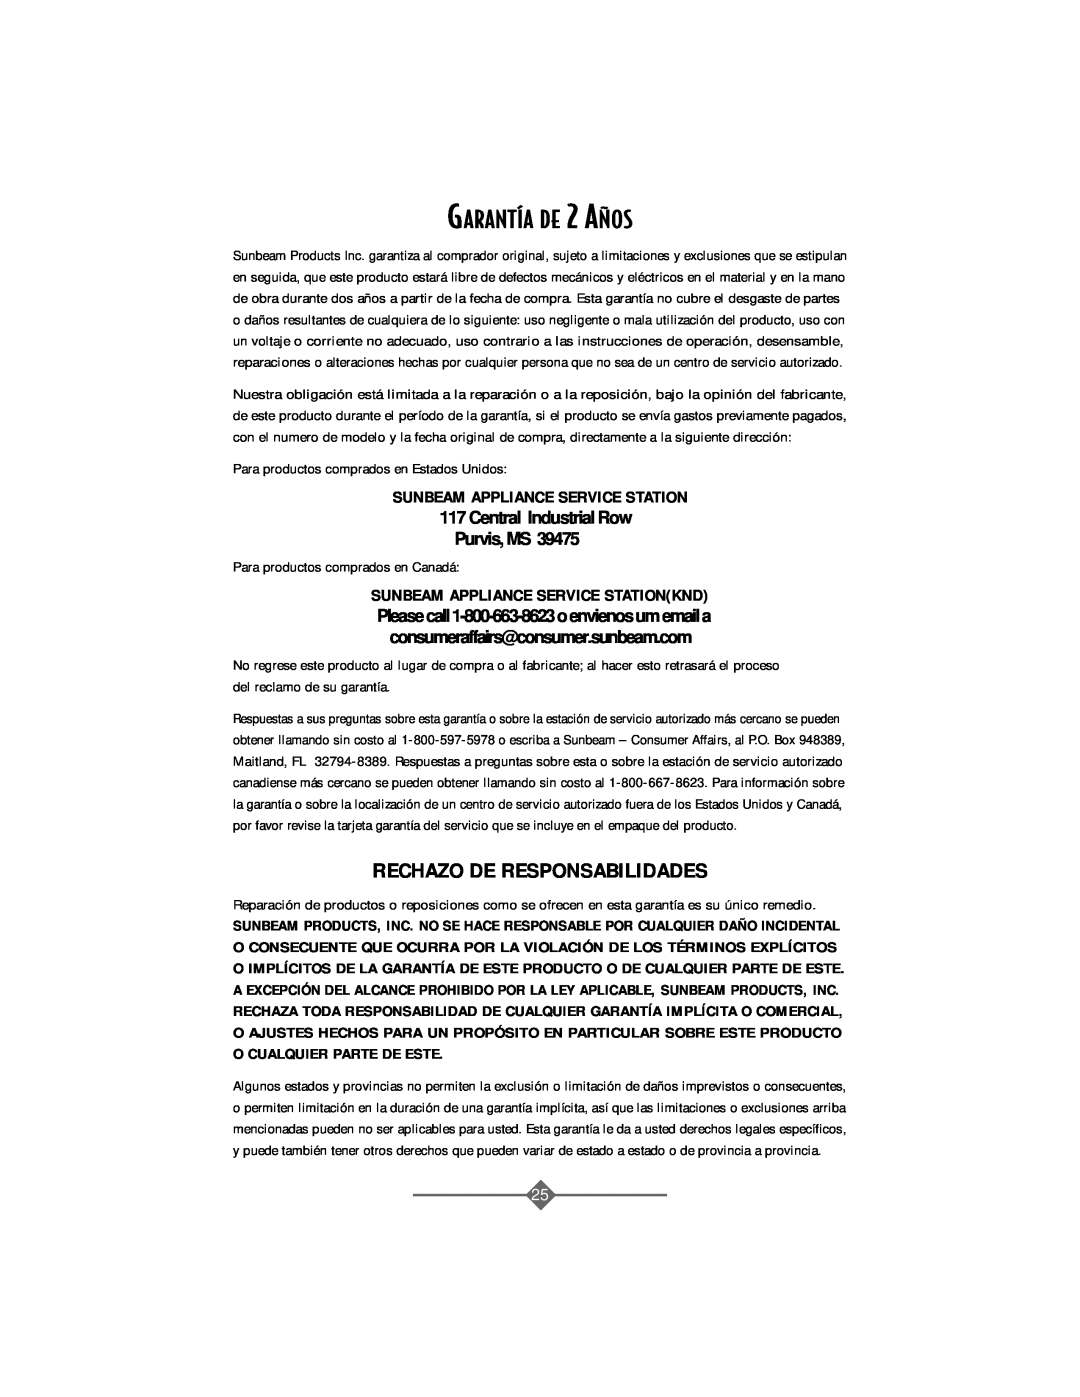 Sunbeam 4816-8 instruction manual GARANTêA DE 2 A„OS, Rechazo De Responsabilidades, Sunbeam Appliance Service Station 